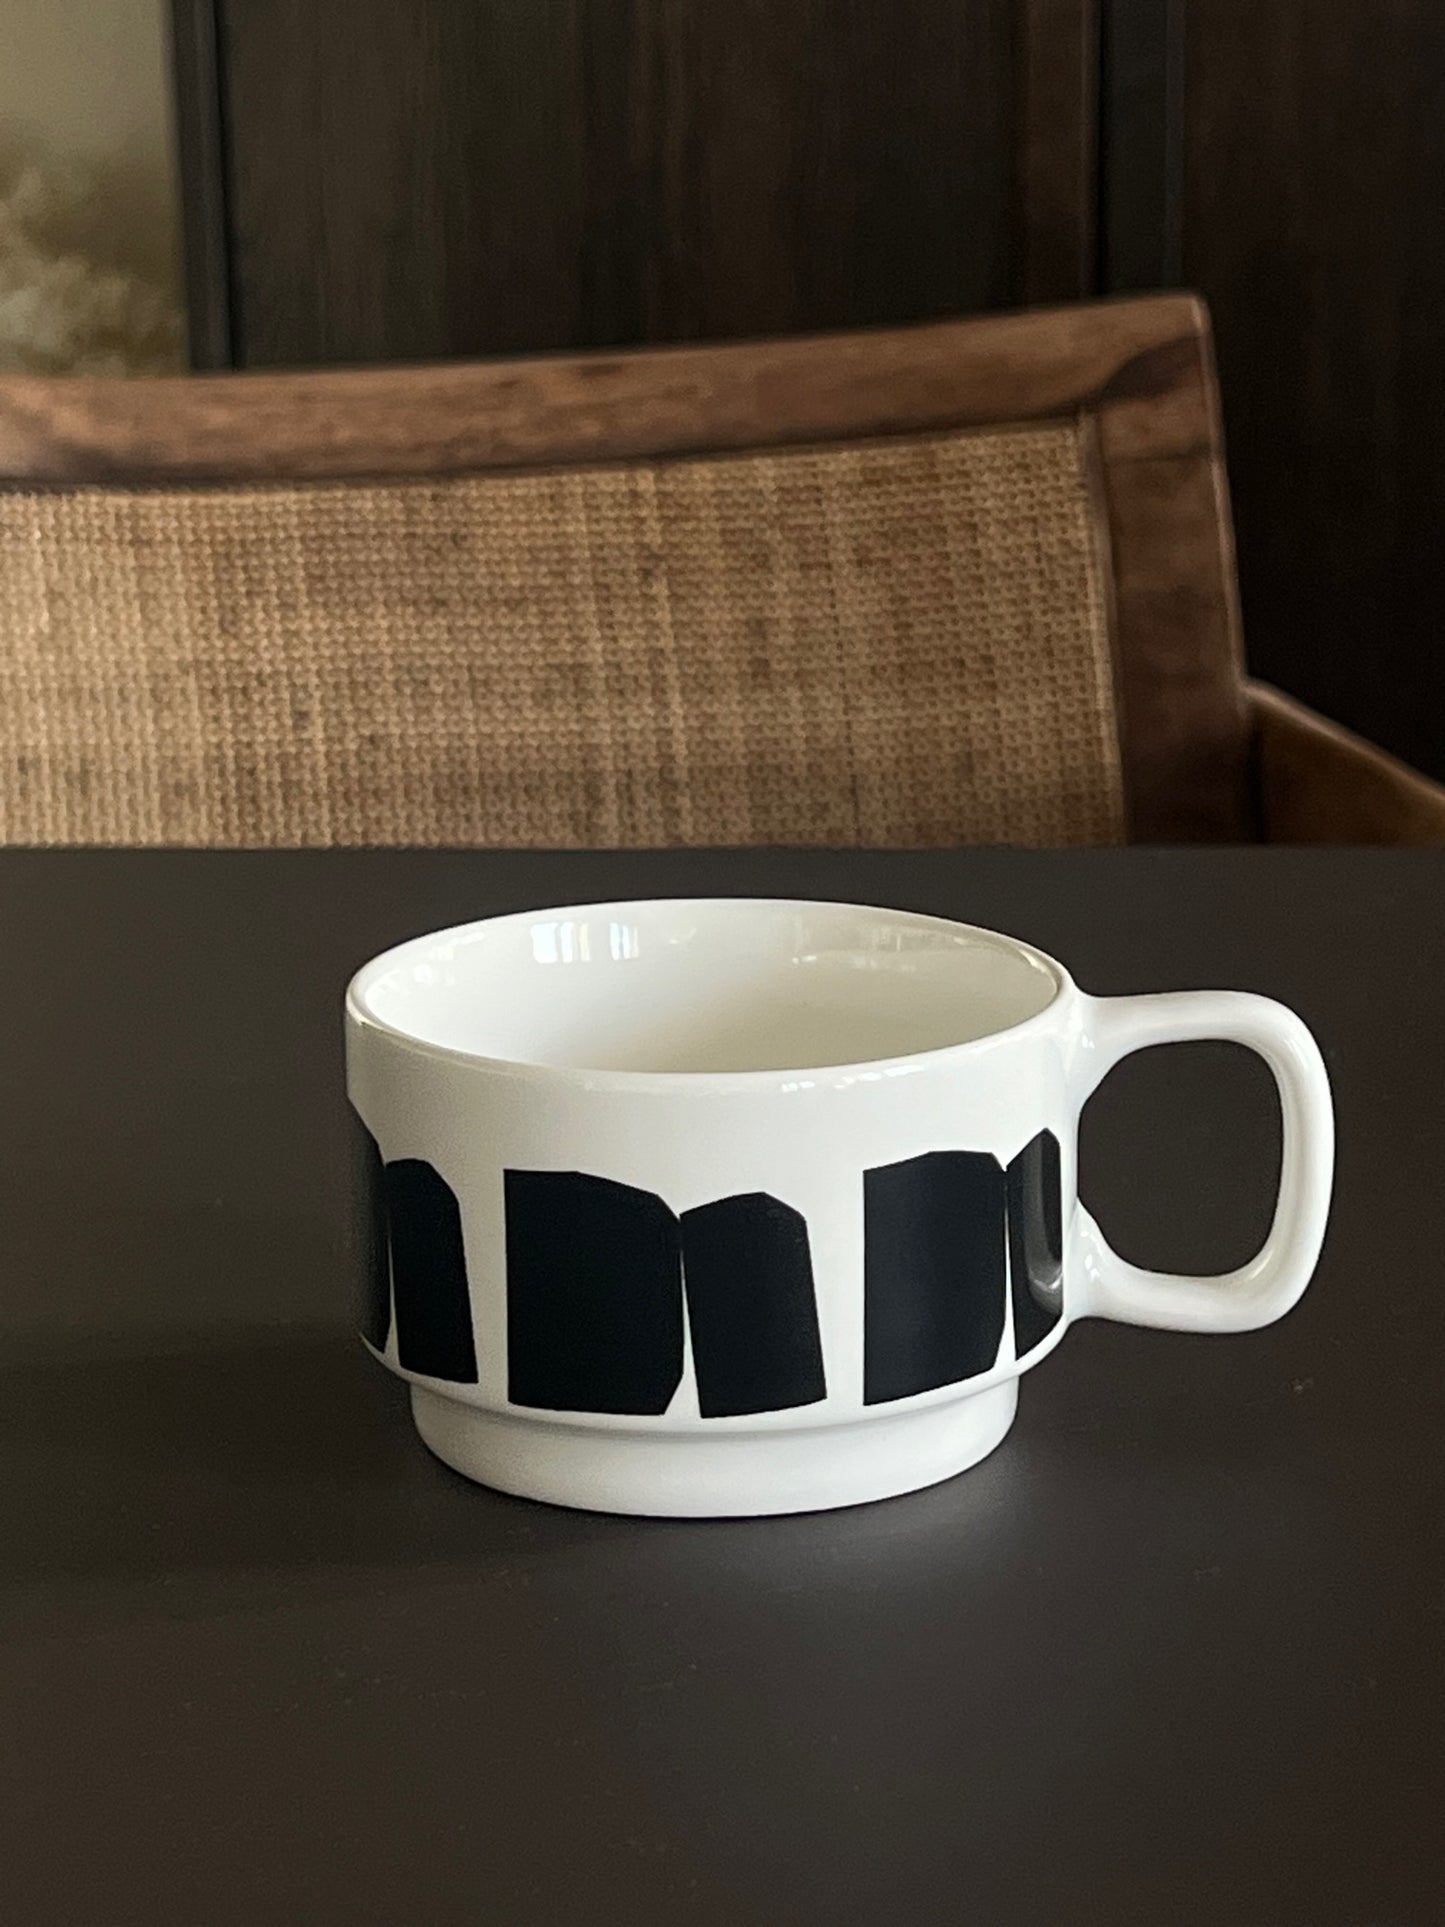 Sisi cup, black graphic design